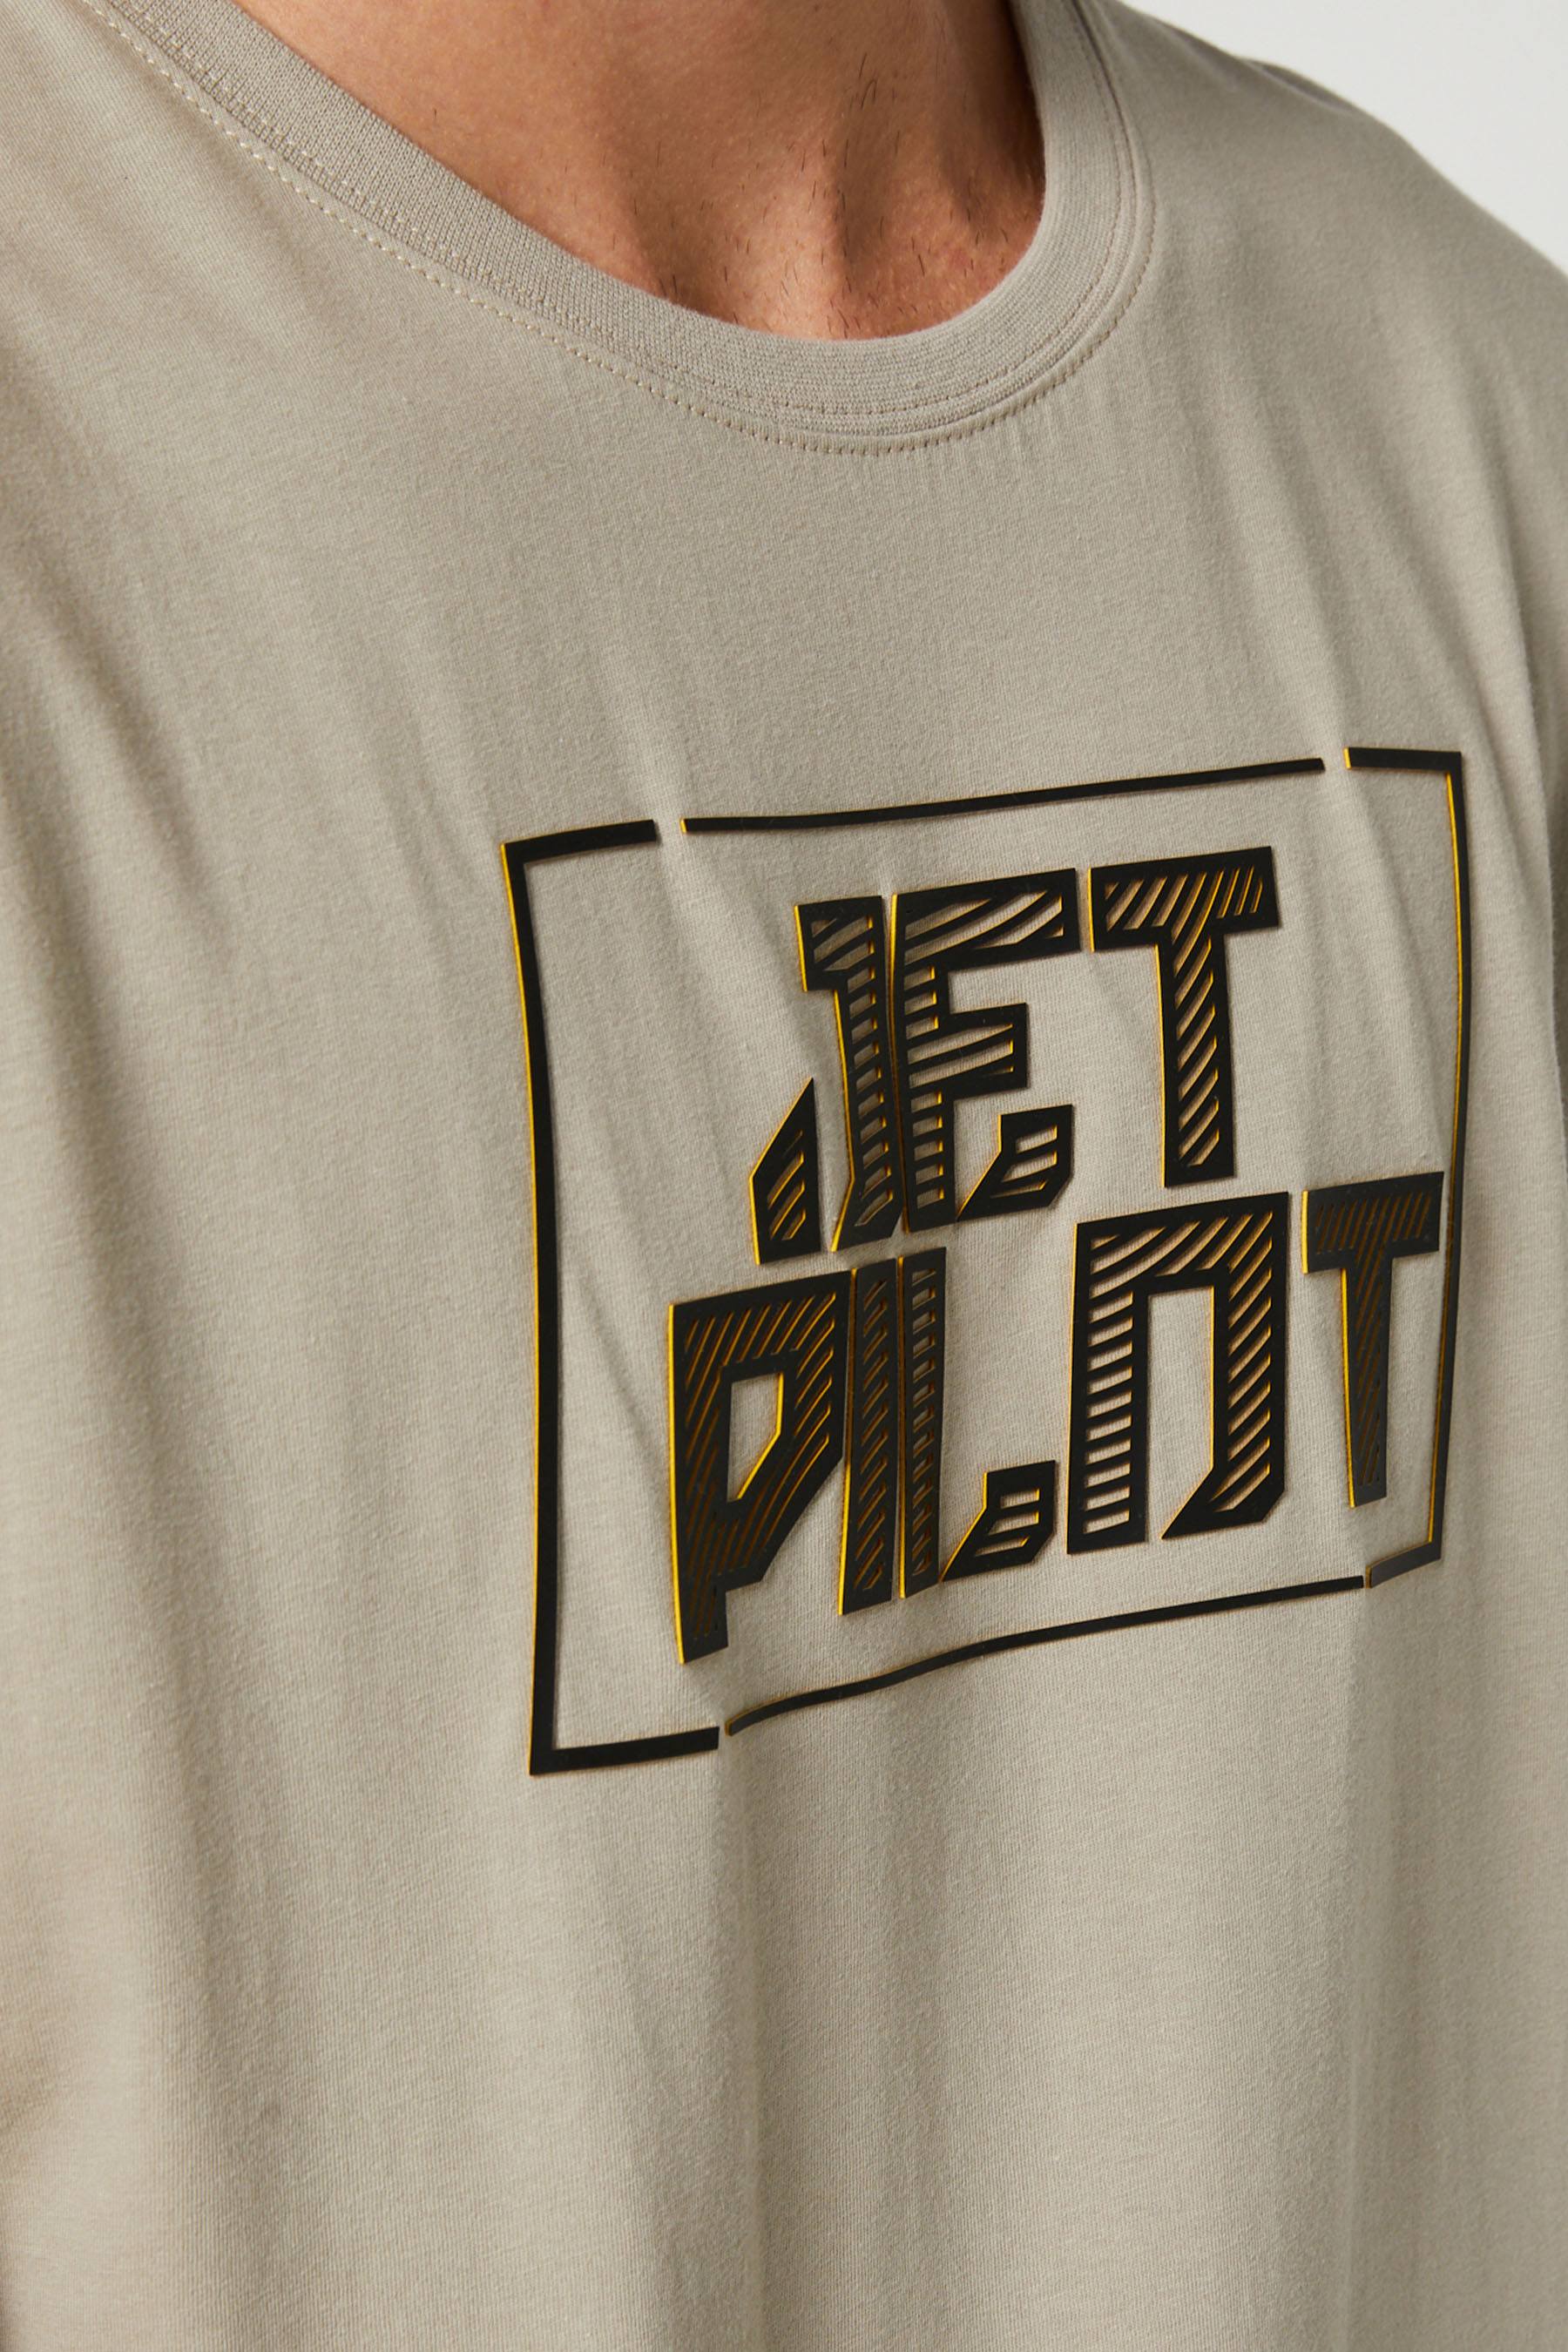 Jetpilot Corp Mens Muscle T-Shirt Warm Grey 2